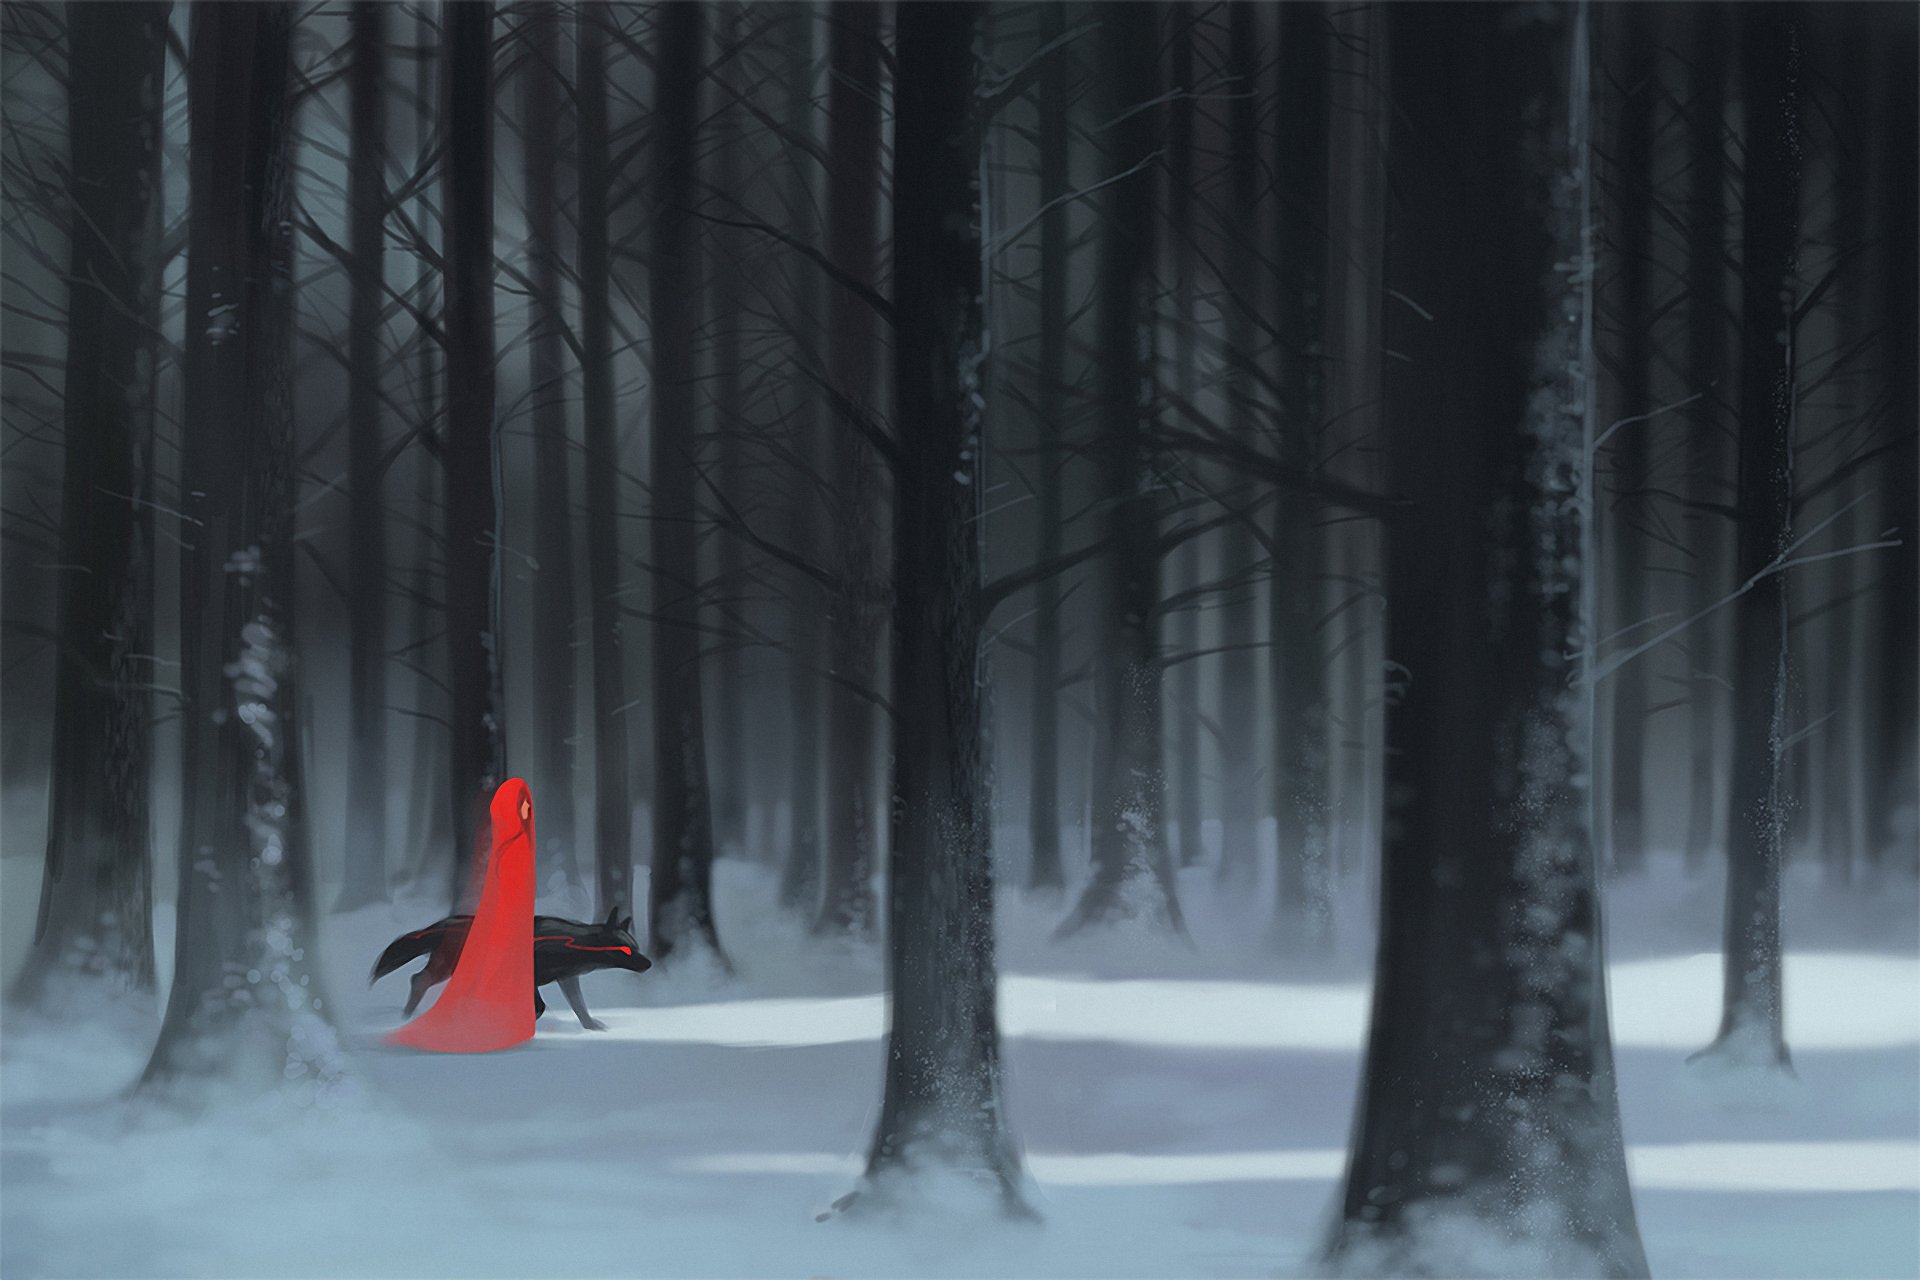 Witch cry 2 the red hood. Страшный зимний лес арт. Красная шапочка в зимнем лесу. Лес снег арт. Красная шапочка в лесу арт.